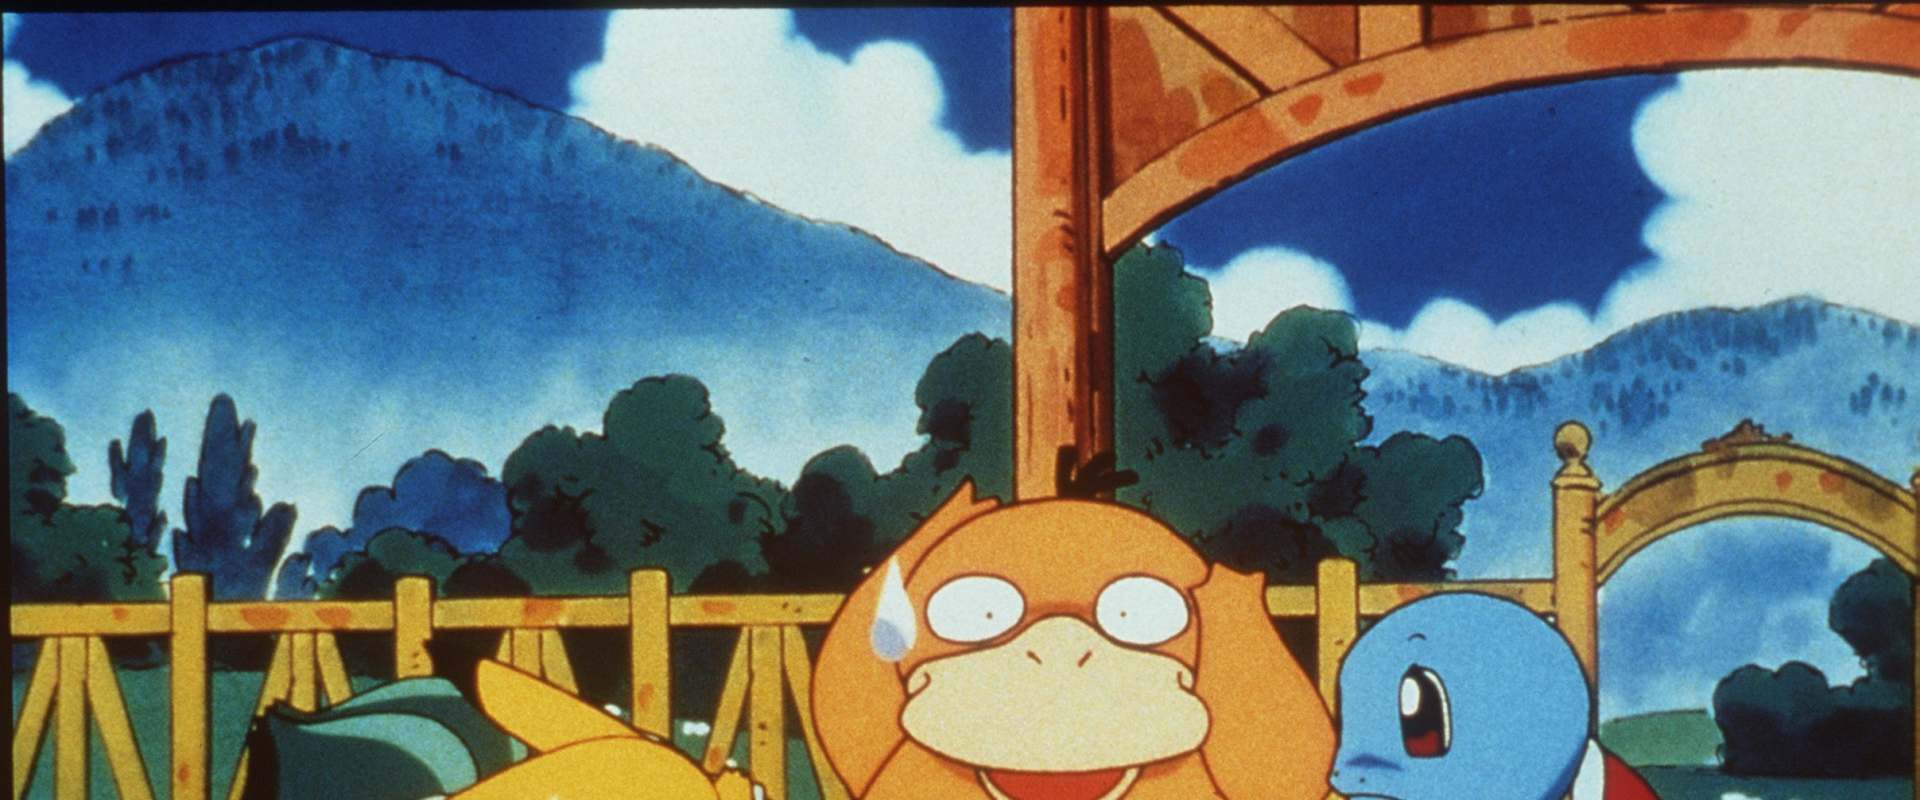 Pikachu's Vacation background 1